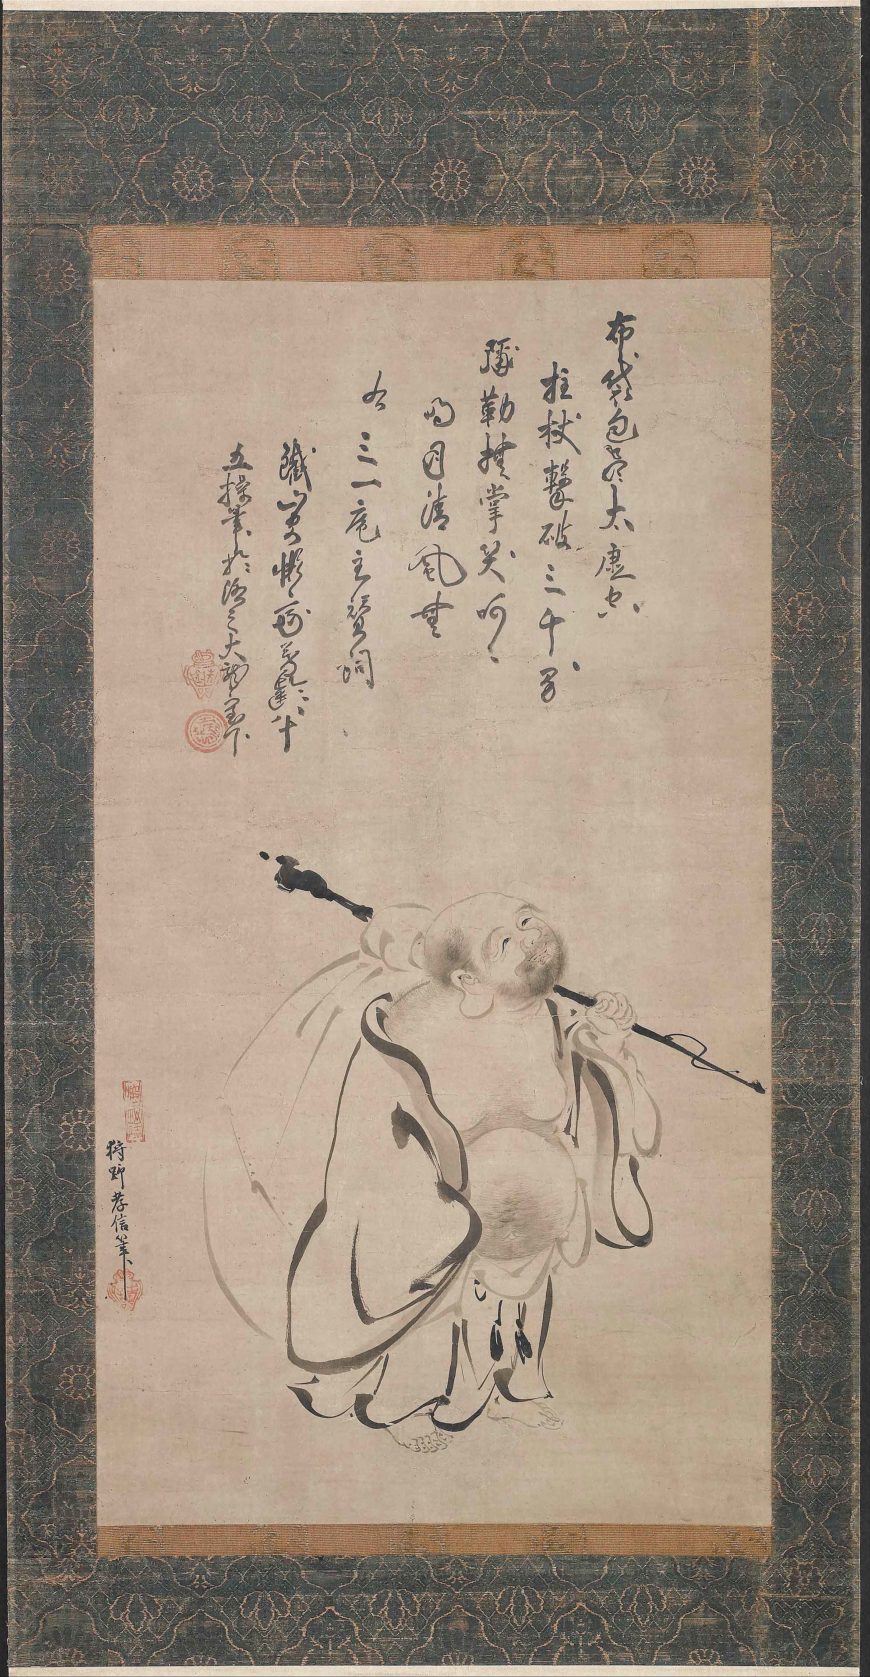 Hotei. Kanou Takanobu. 1616. Edo period. Japan. Image courtesy of The Met.